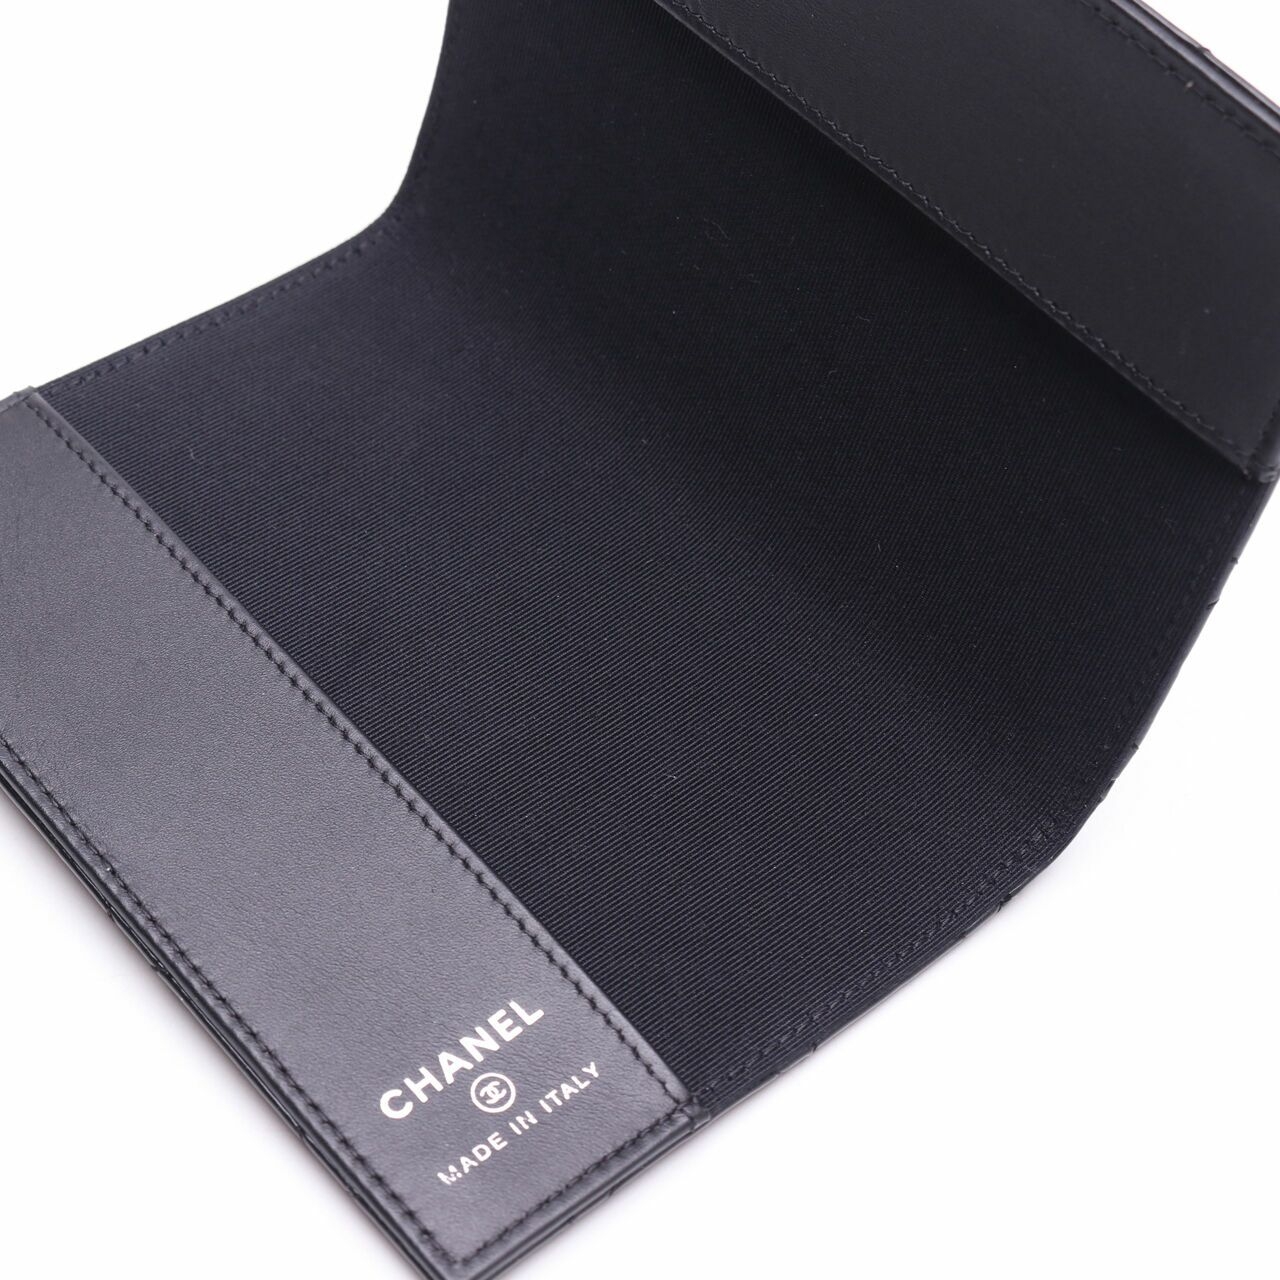 Chanel Black Patent Leather Passport Holder